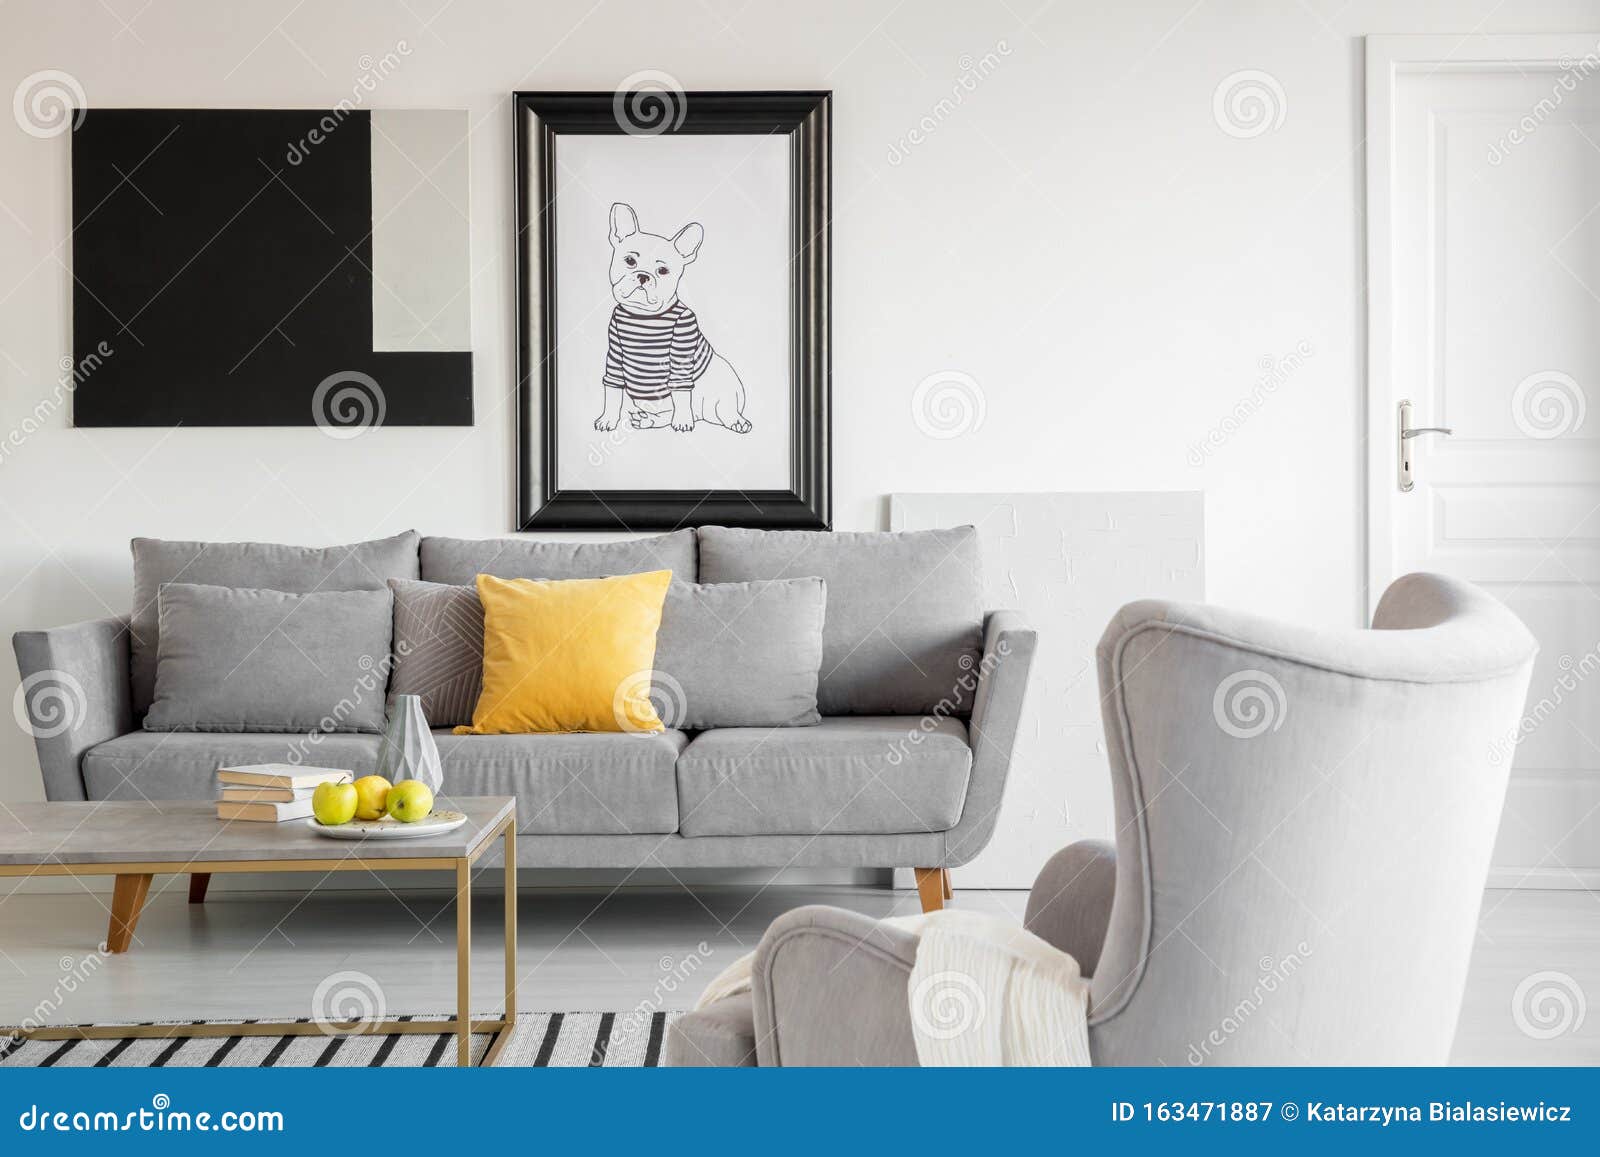 Harper&Bright Designs Living Room Sets Furniture Armrest Single Seat Sofa Light Gray